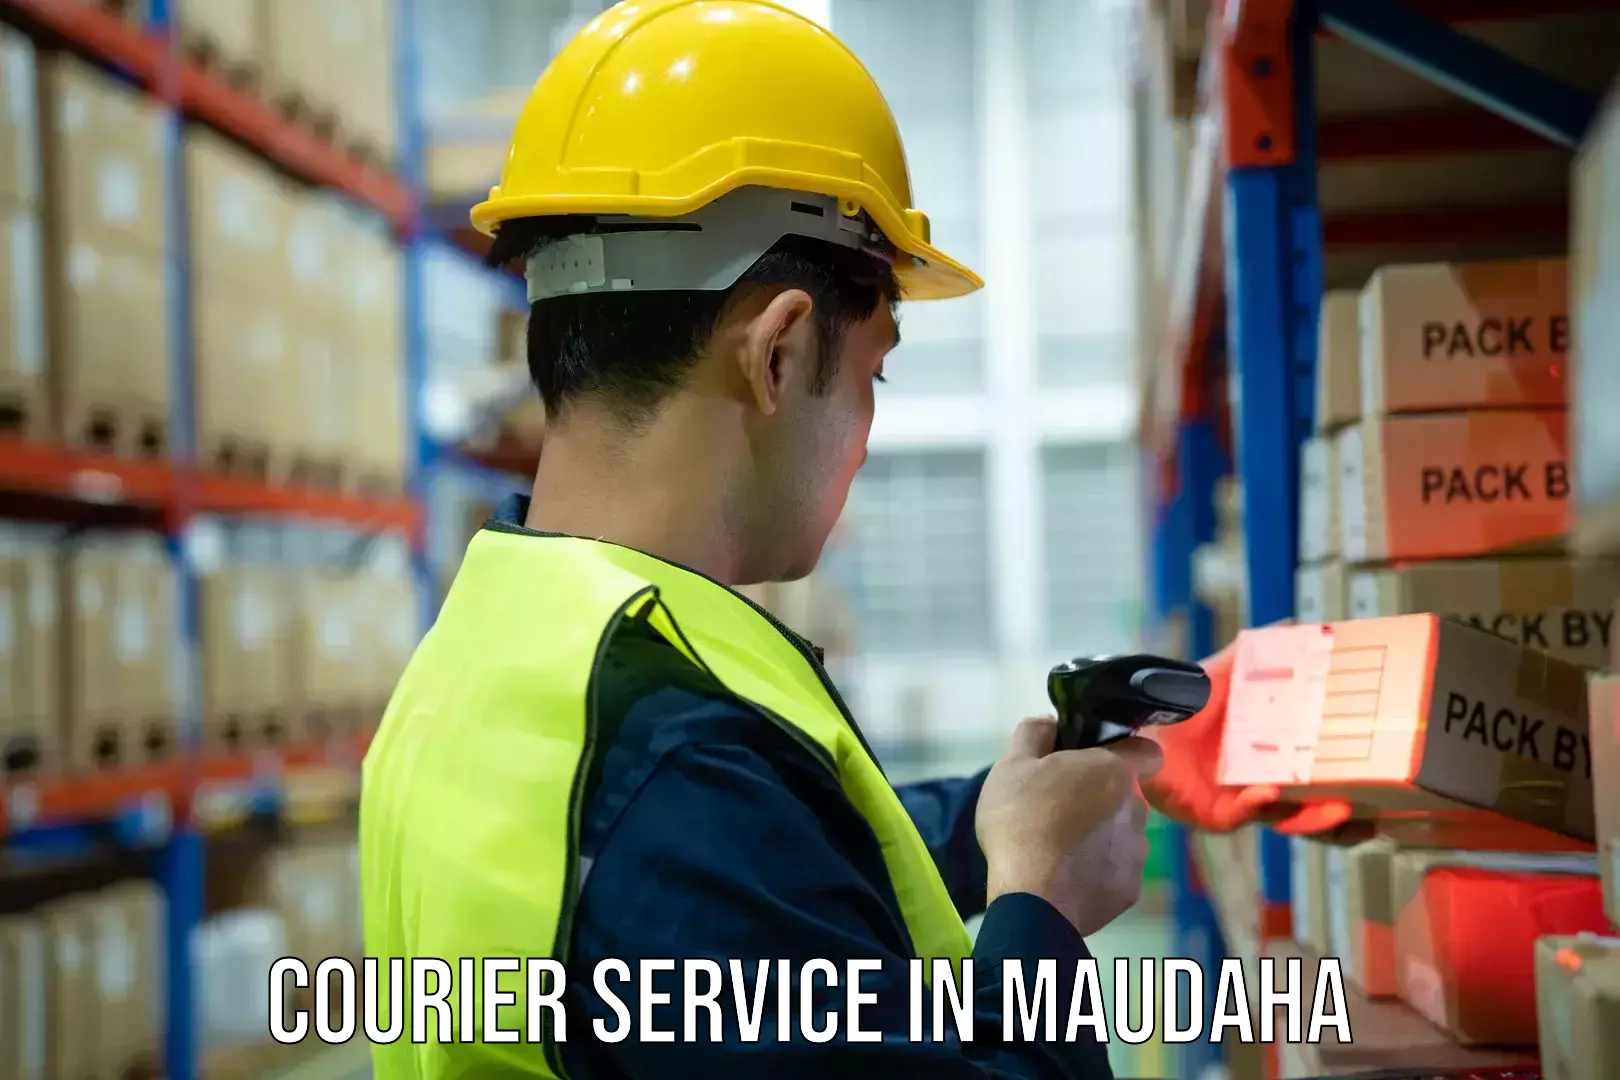 Express package handling in Maudaha